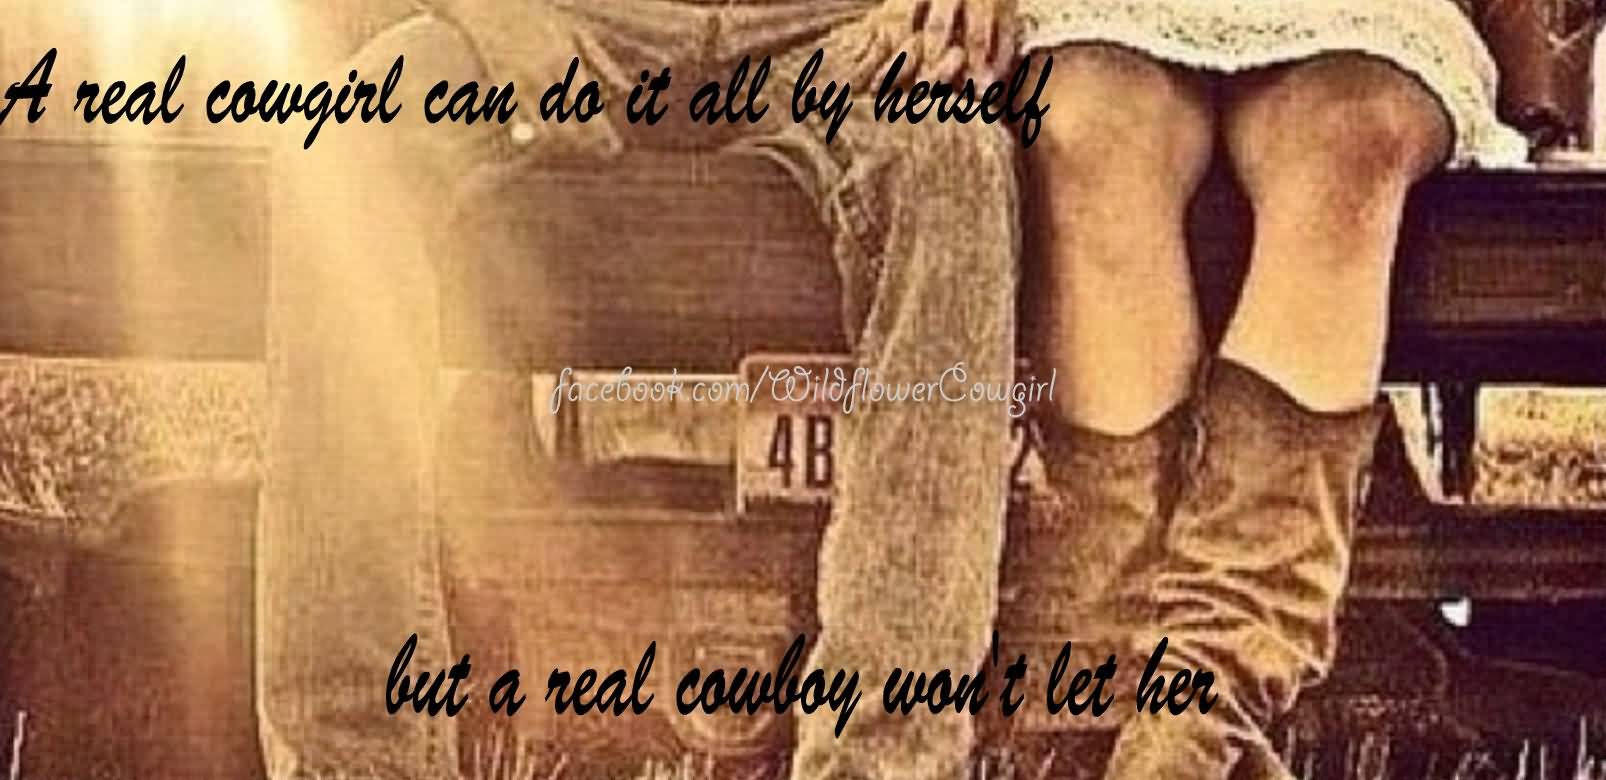 cowboy love quotes